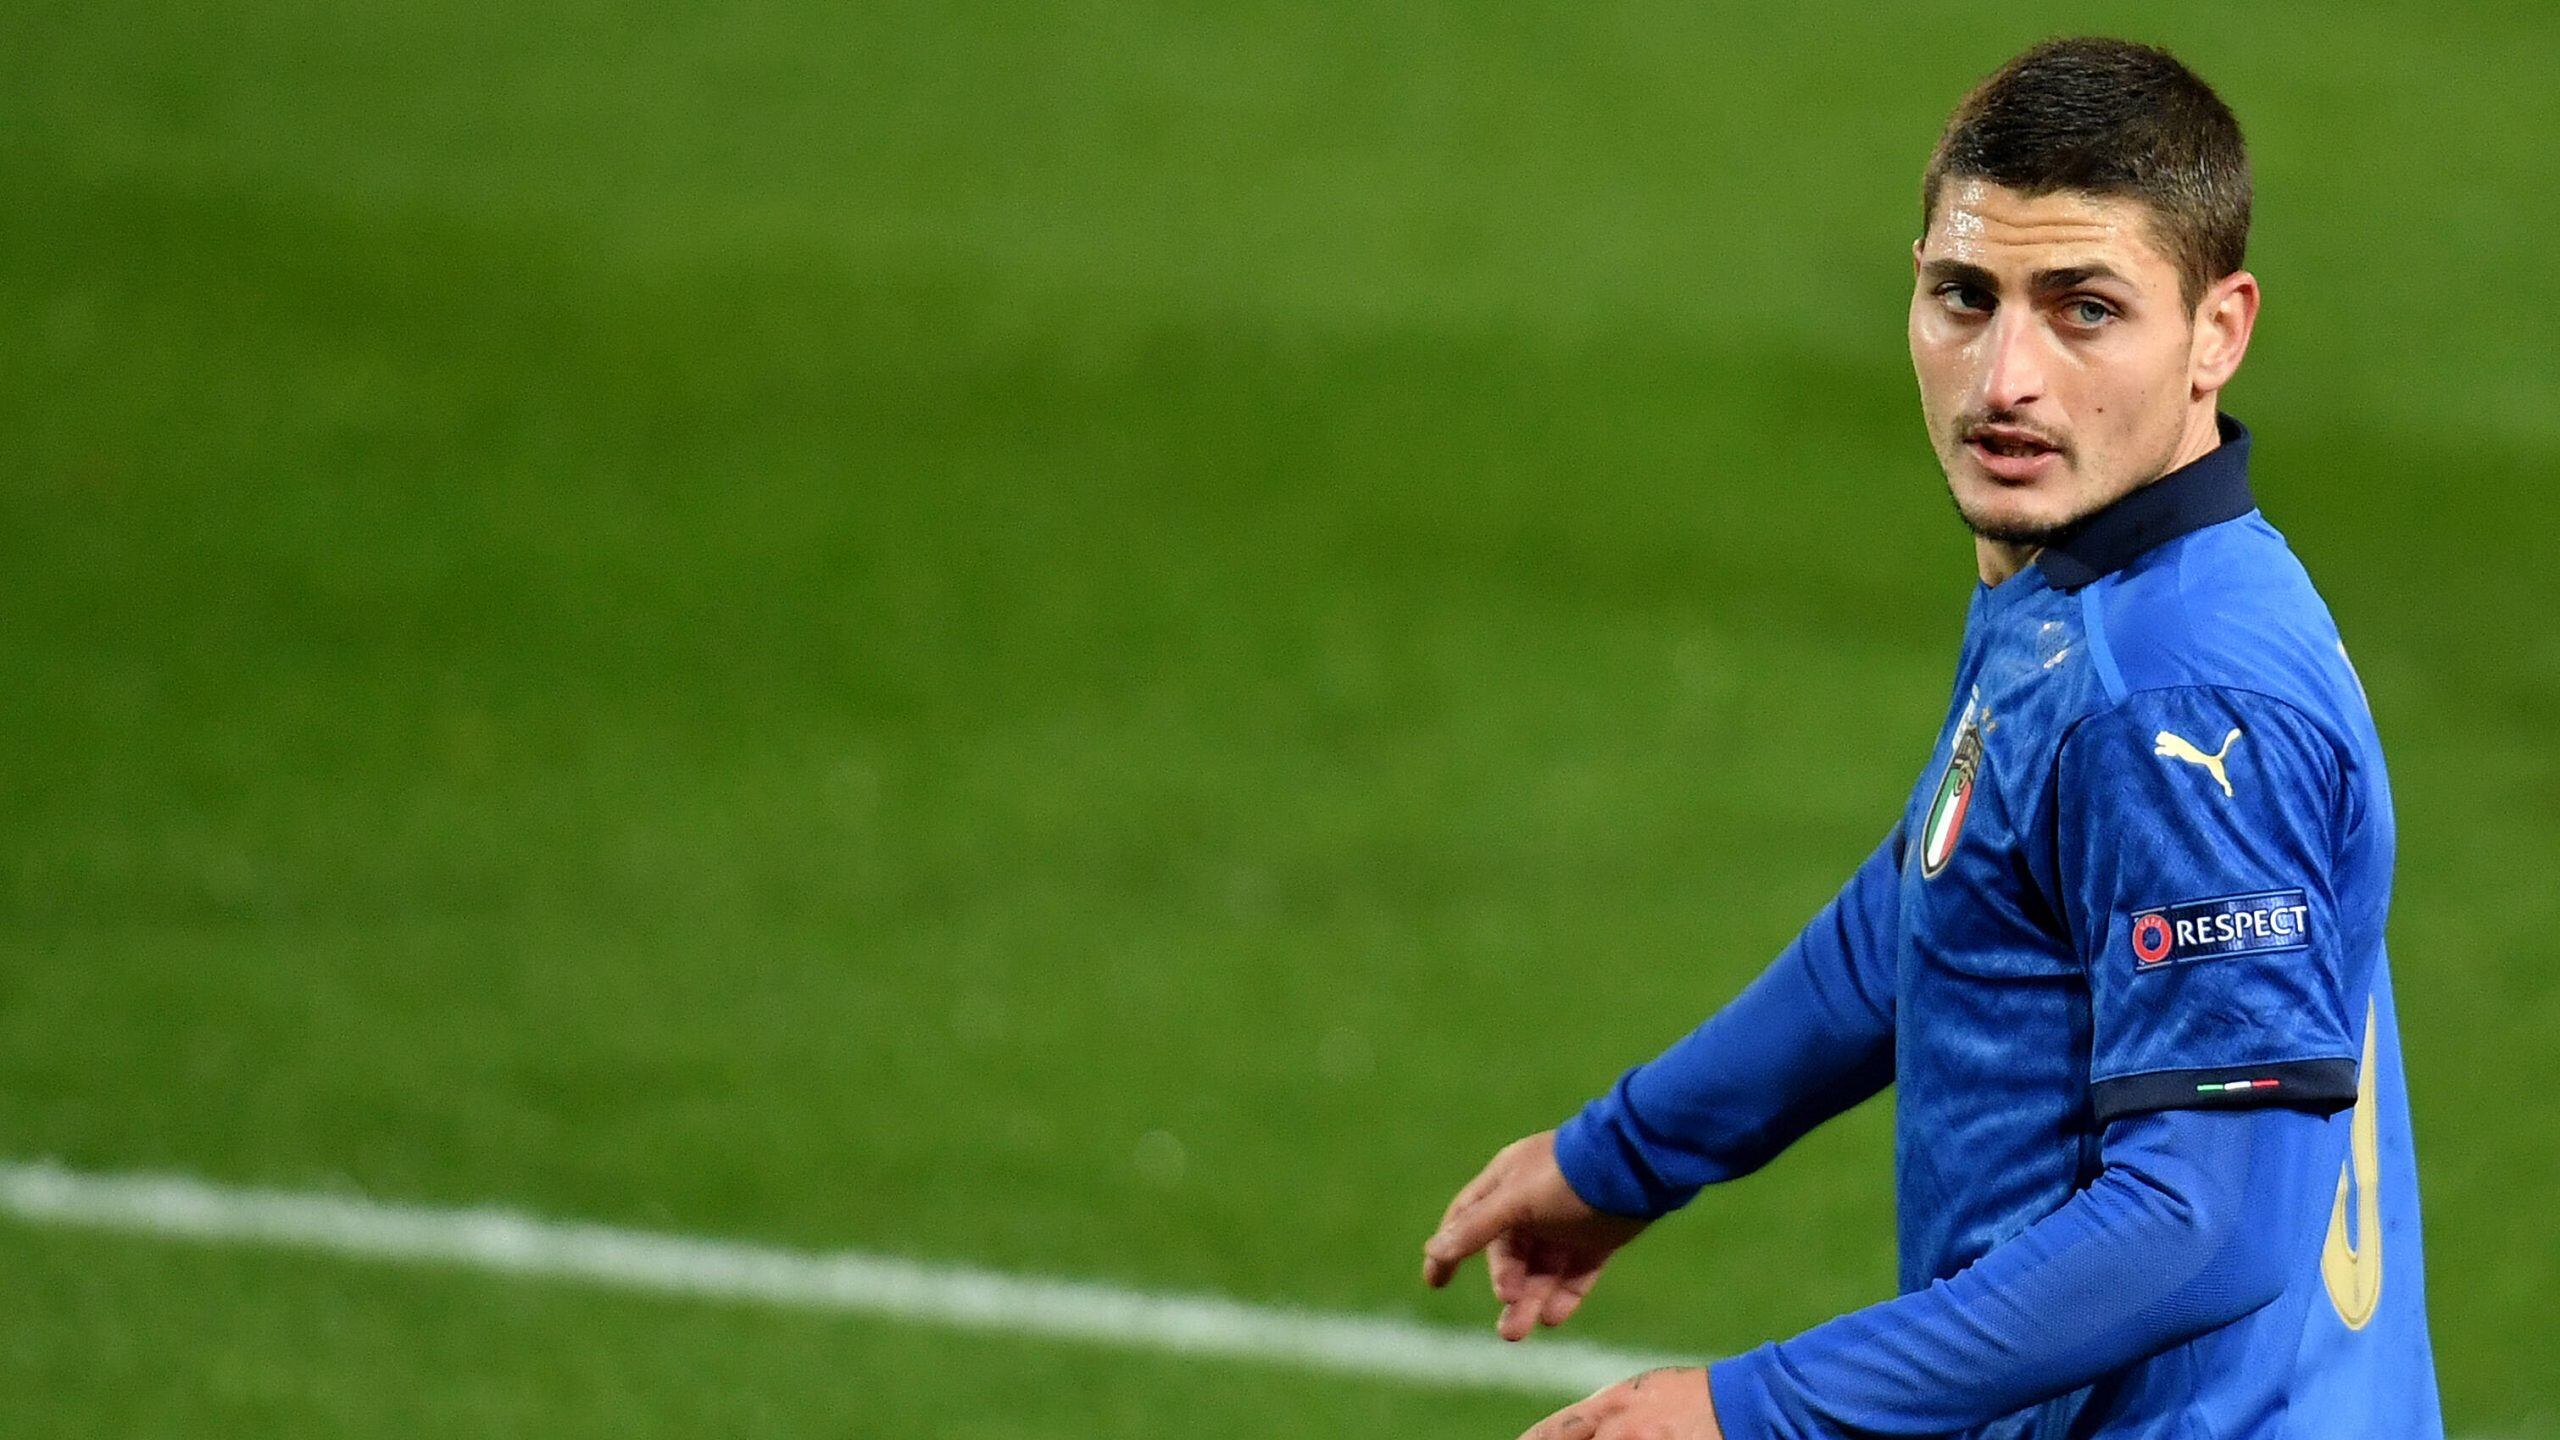 Top Italian midfielder rejects top club after winning Nations League bronze